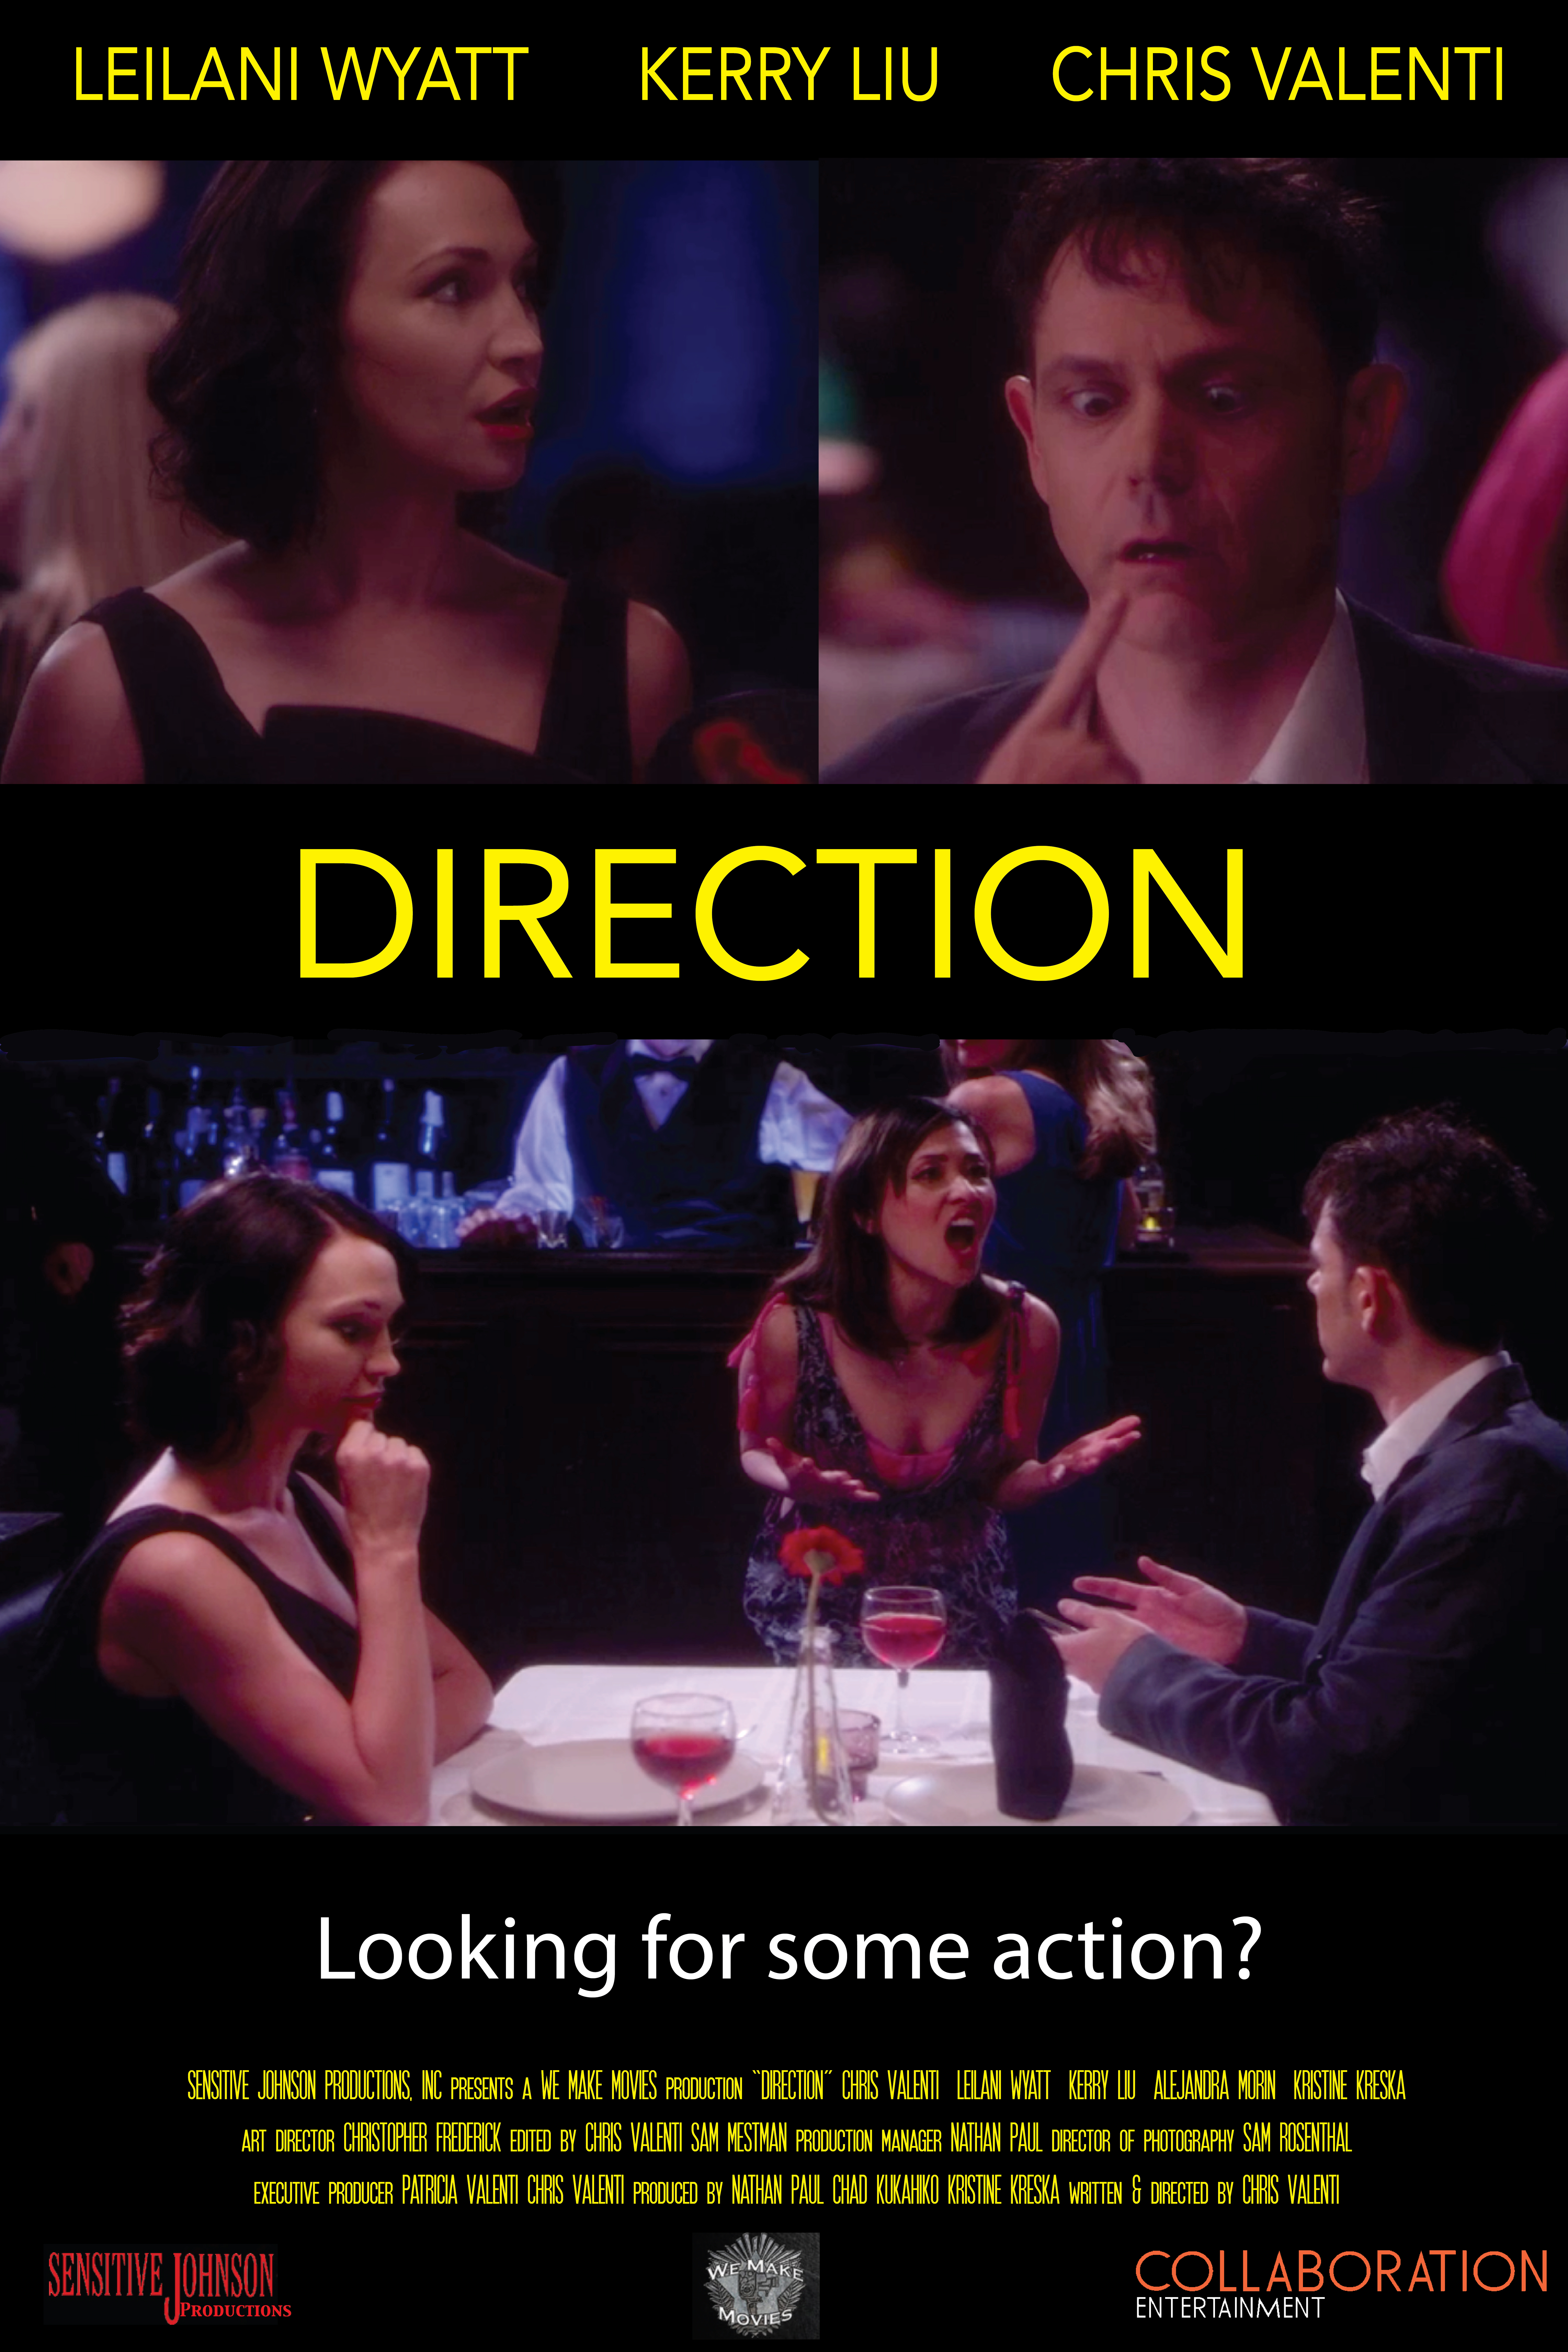 Kerry Liu, Chris Valenti, Kristine Kreska and Leilani Wyatt in Direction (2014)